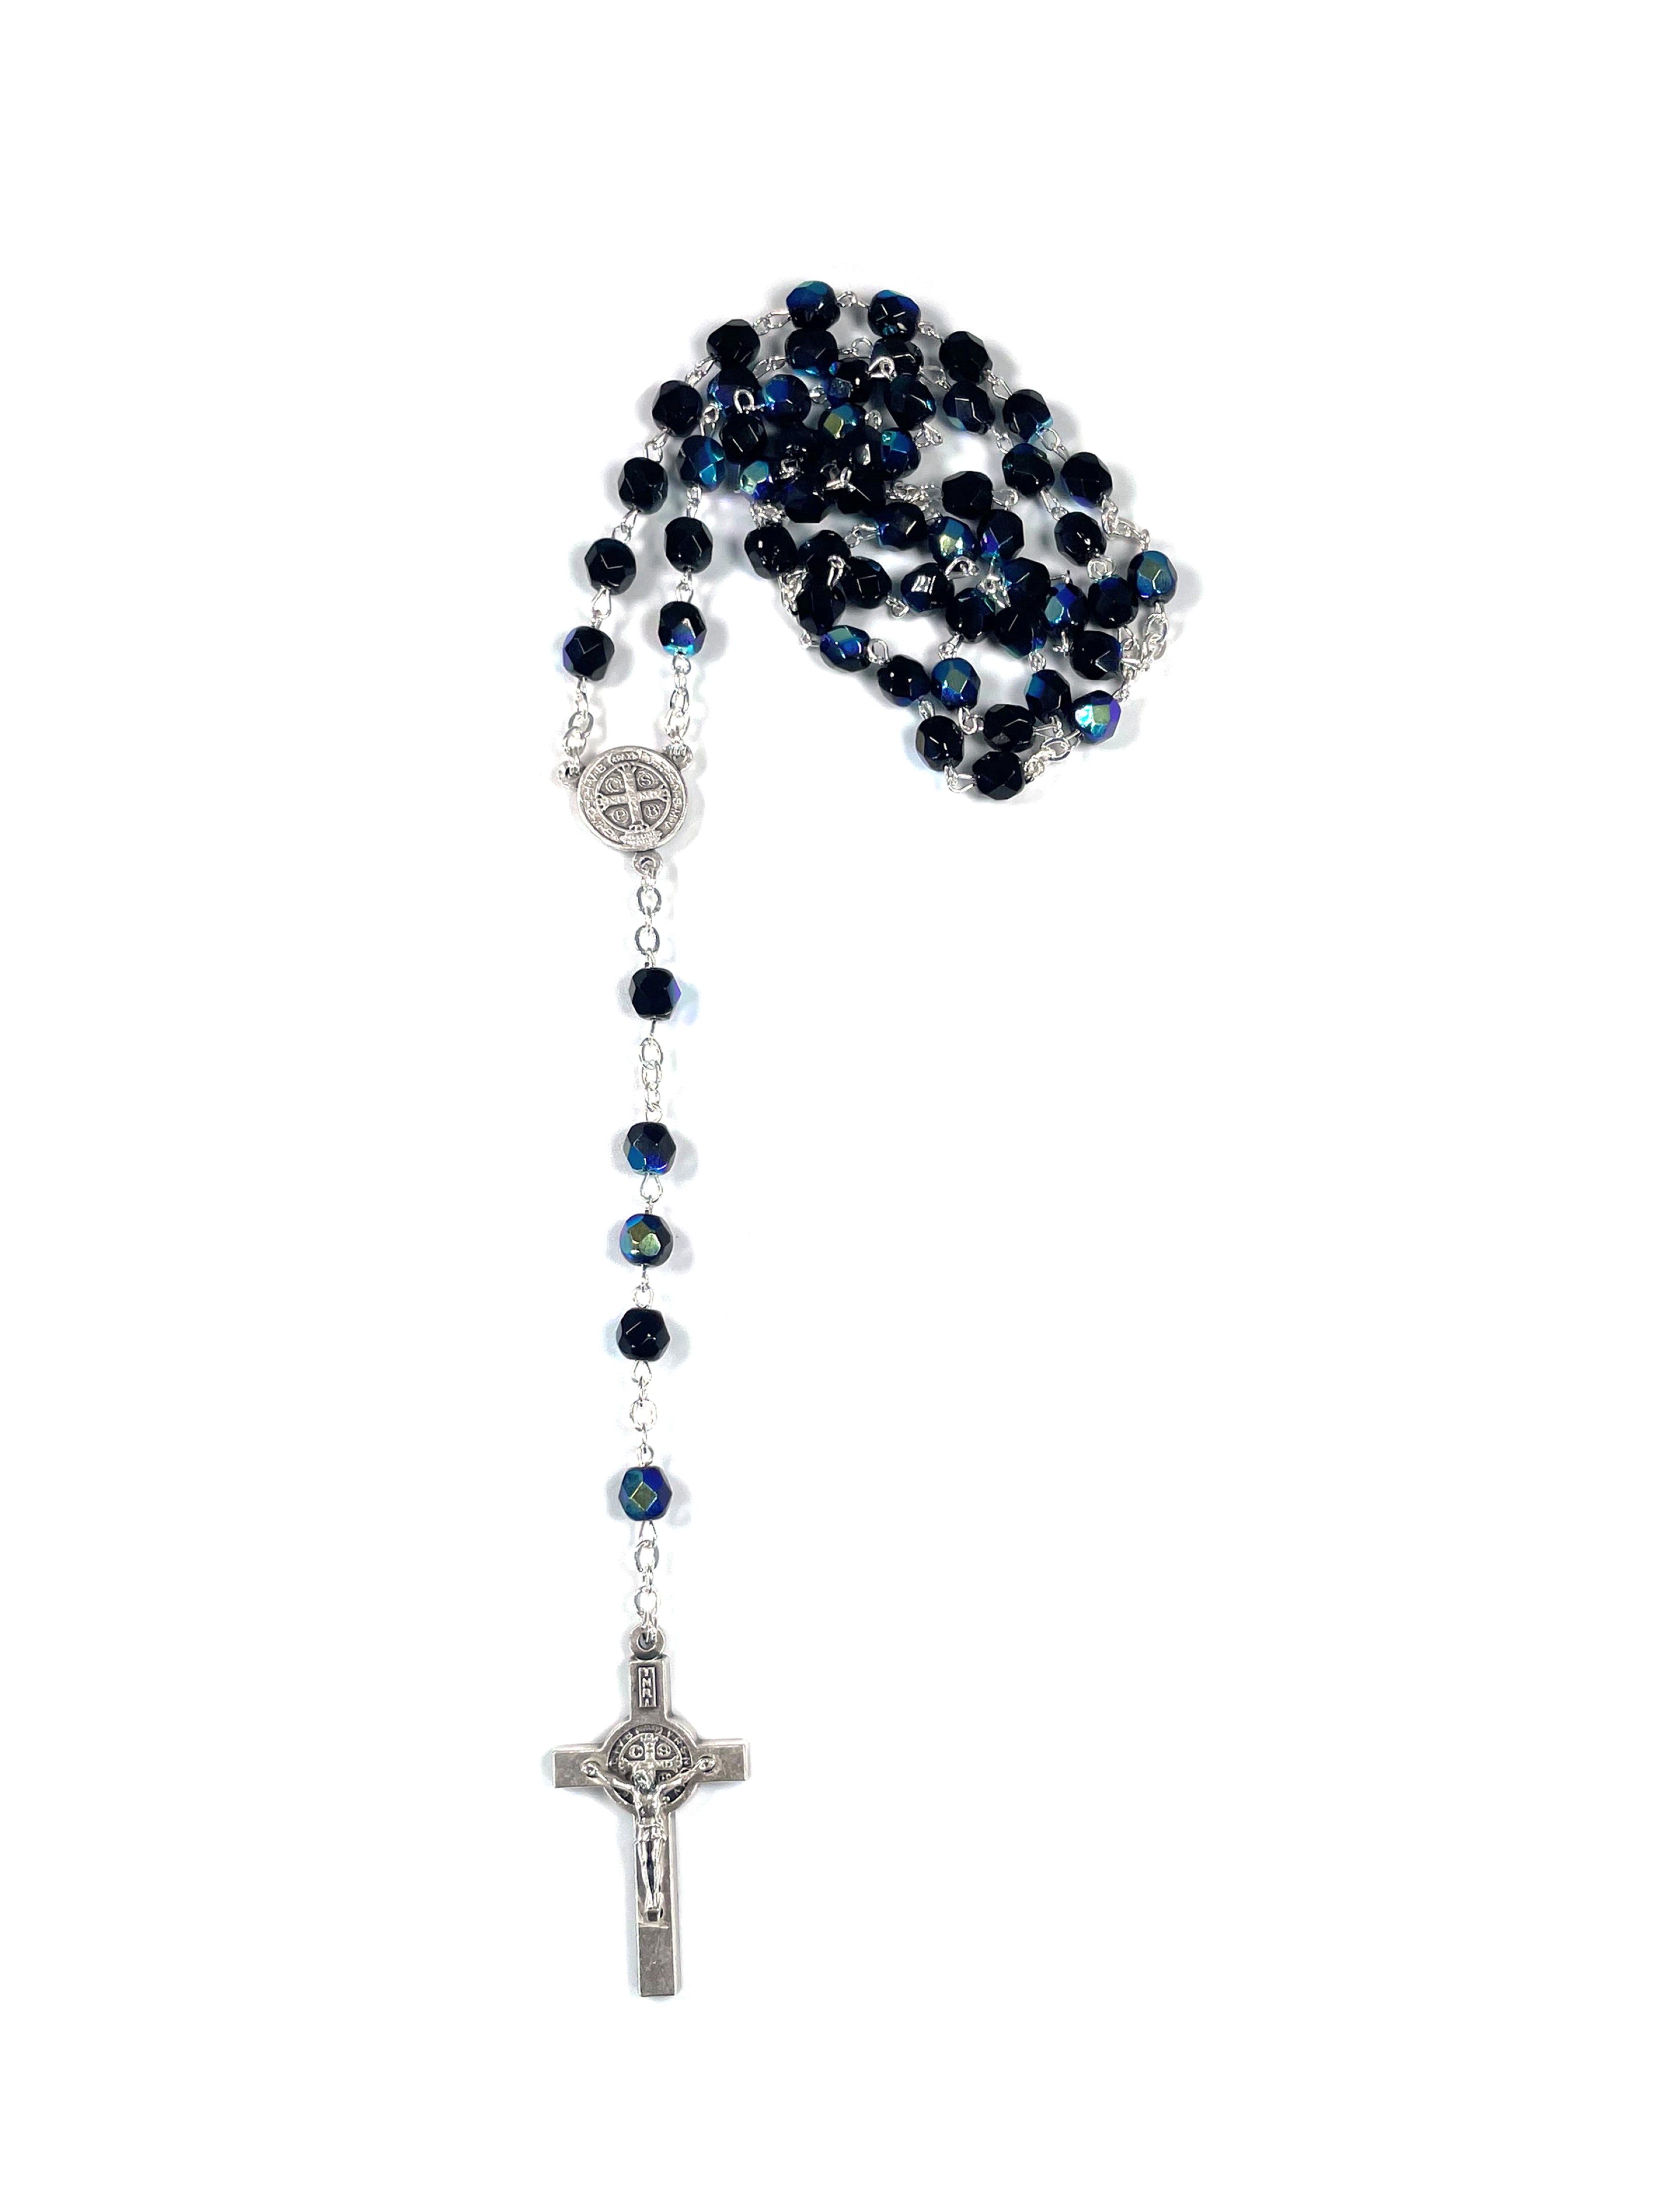 Iridescent black color Saint Benedict rosary